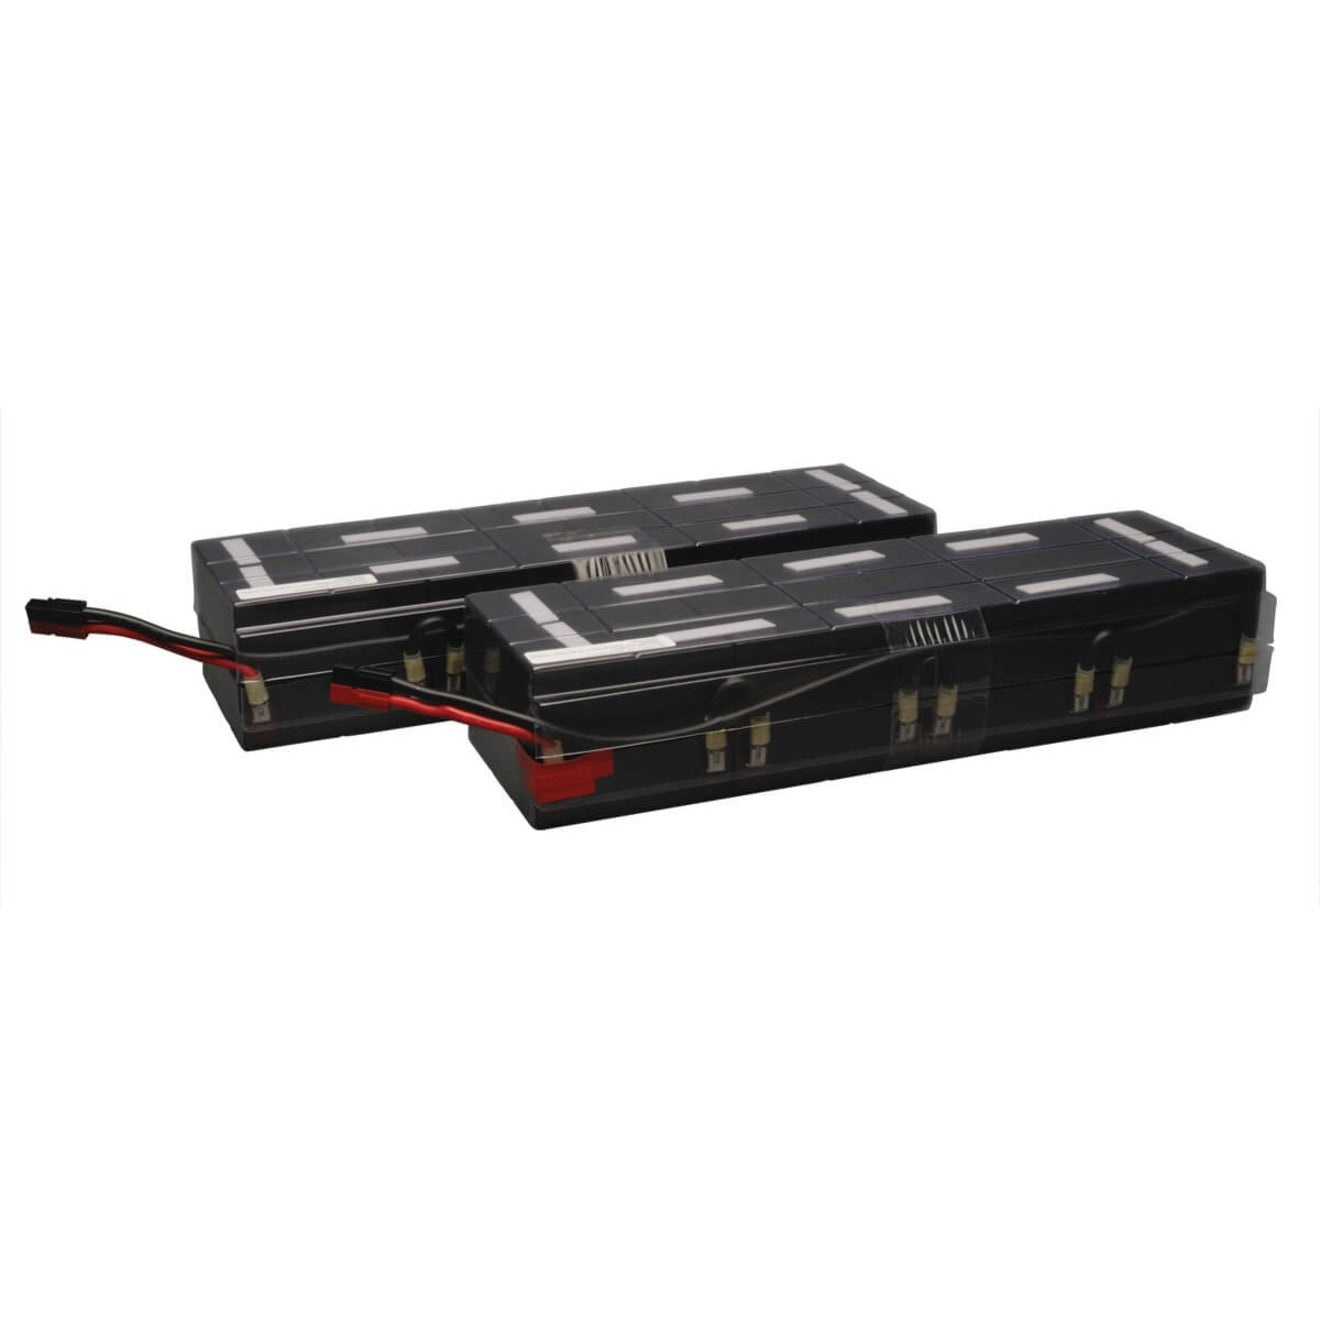 Tripp Lite RBC58-2U UPS Replacement Battery Cartridge, 12V DC, 5 Year Battery Life, Spill-proof/Maintenance-free